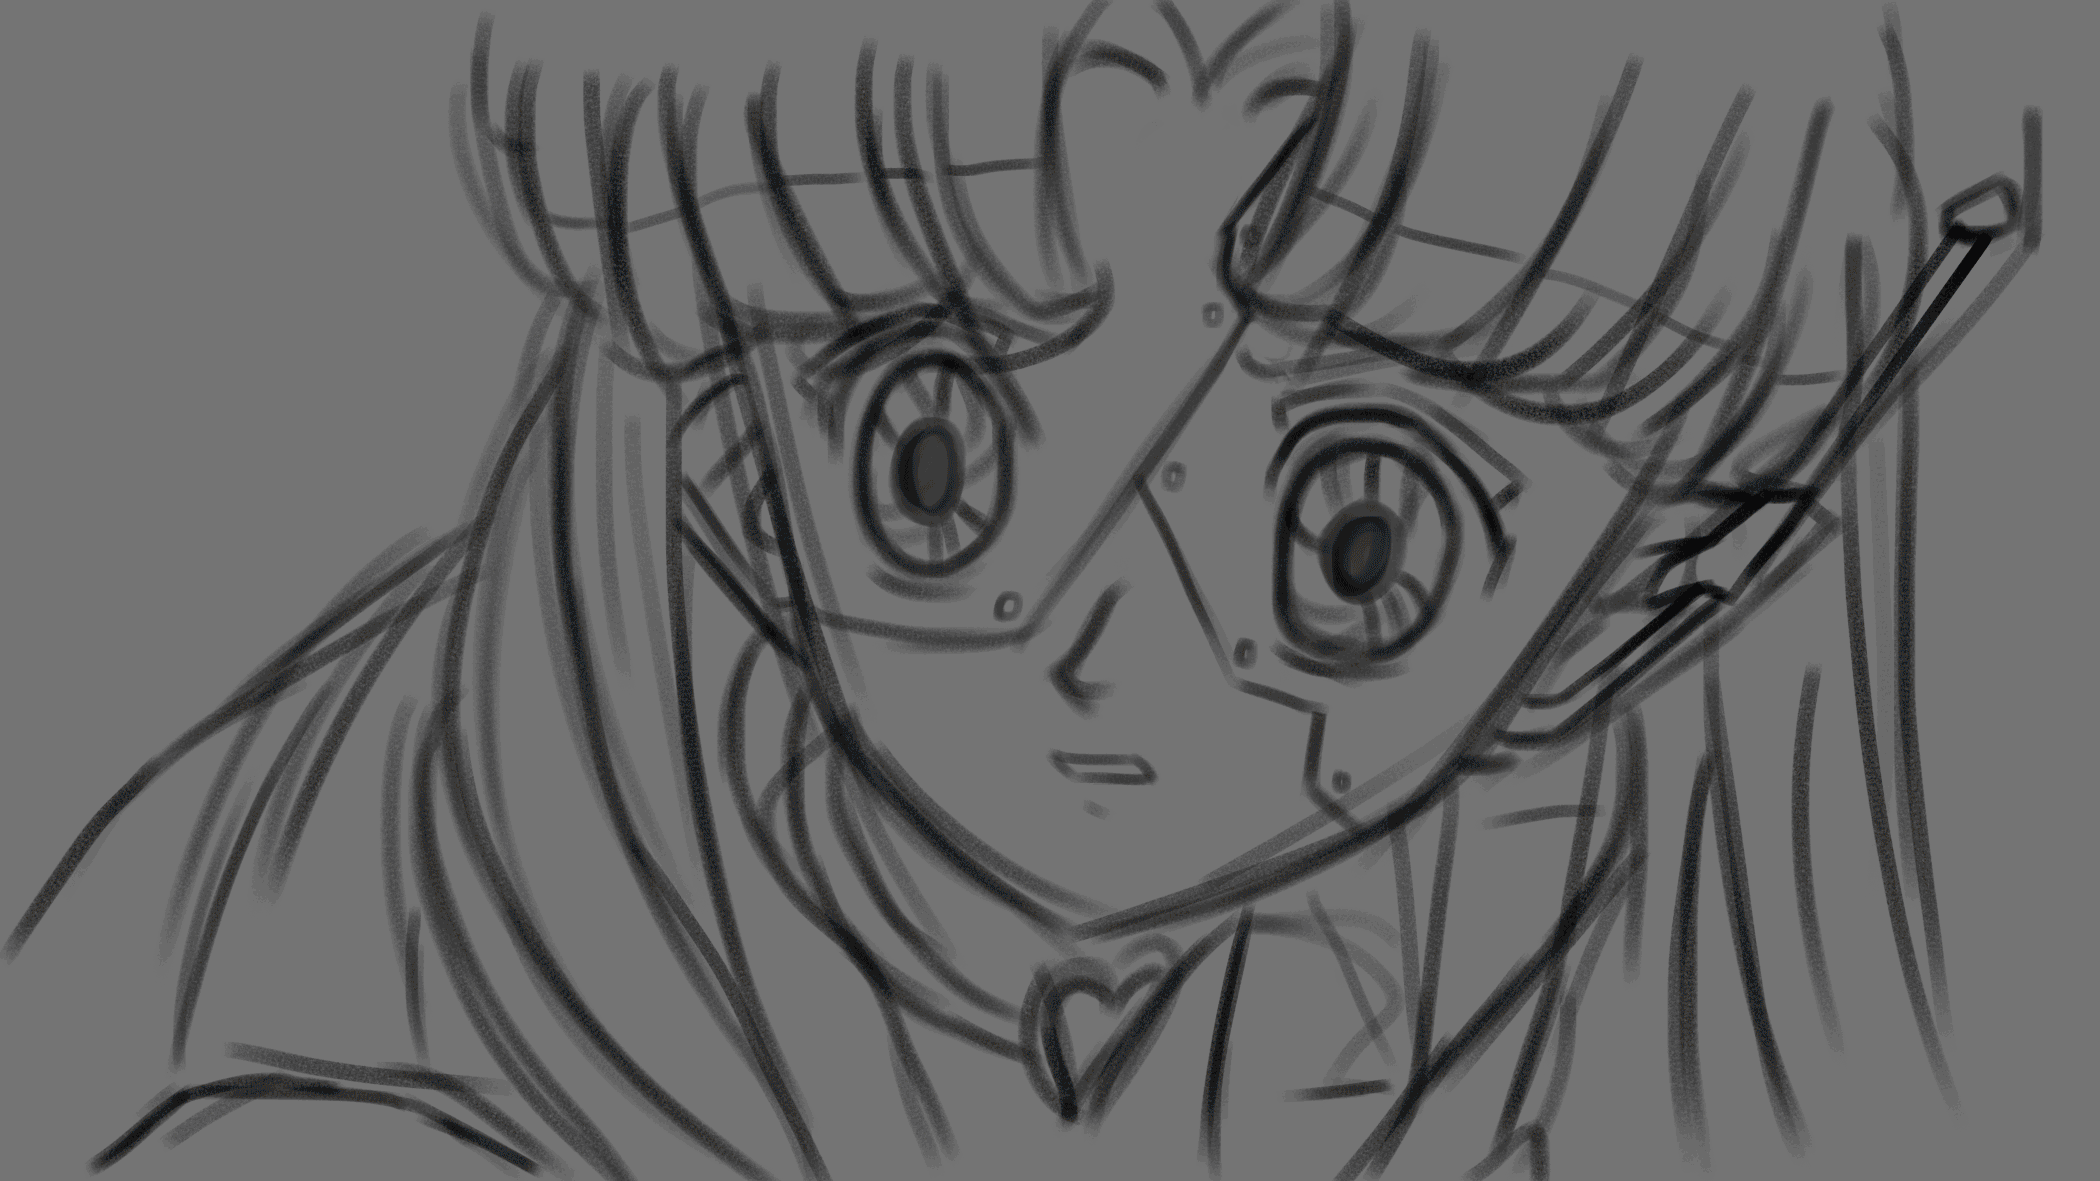 Drawings Of Sailor Moon In Black Marker